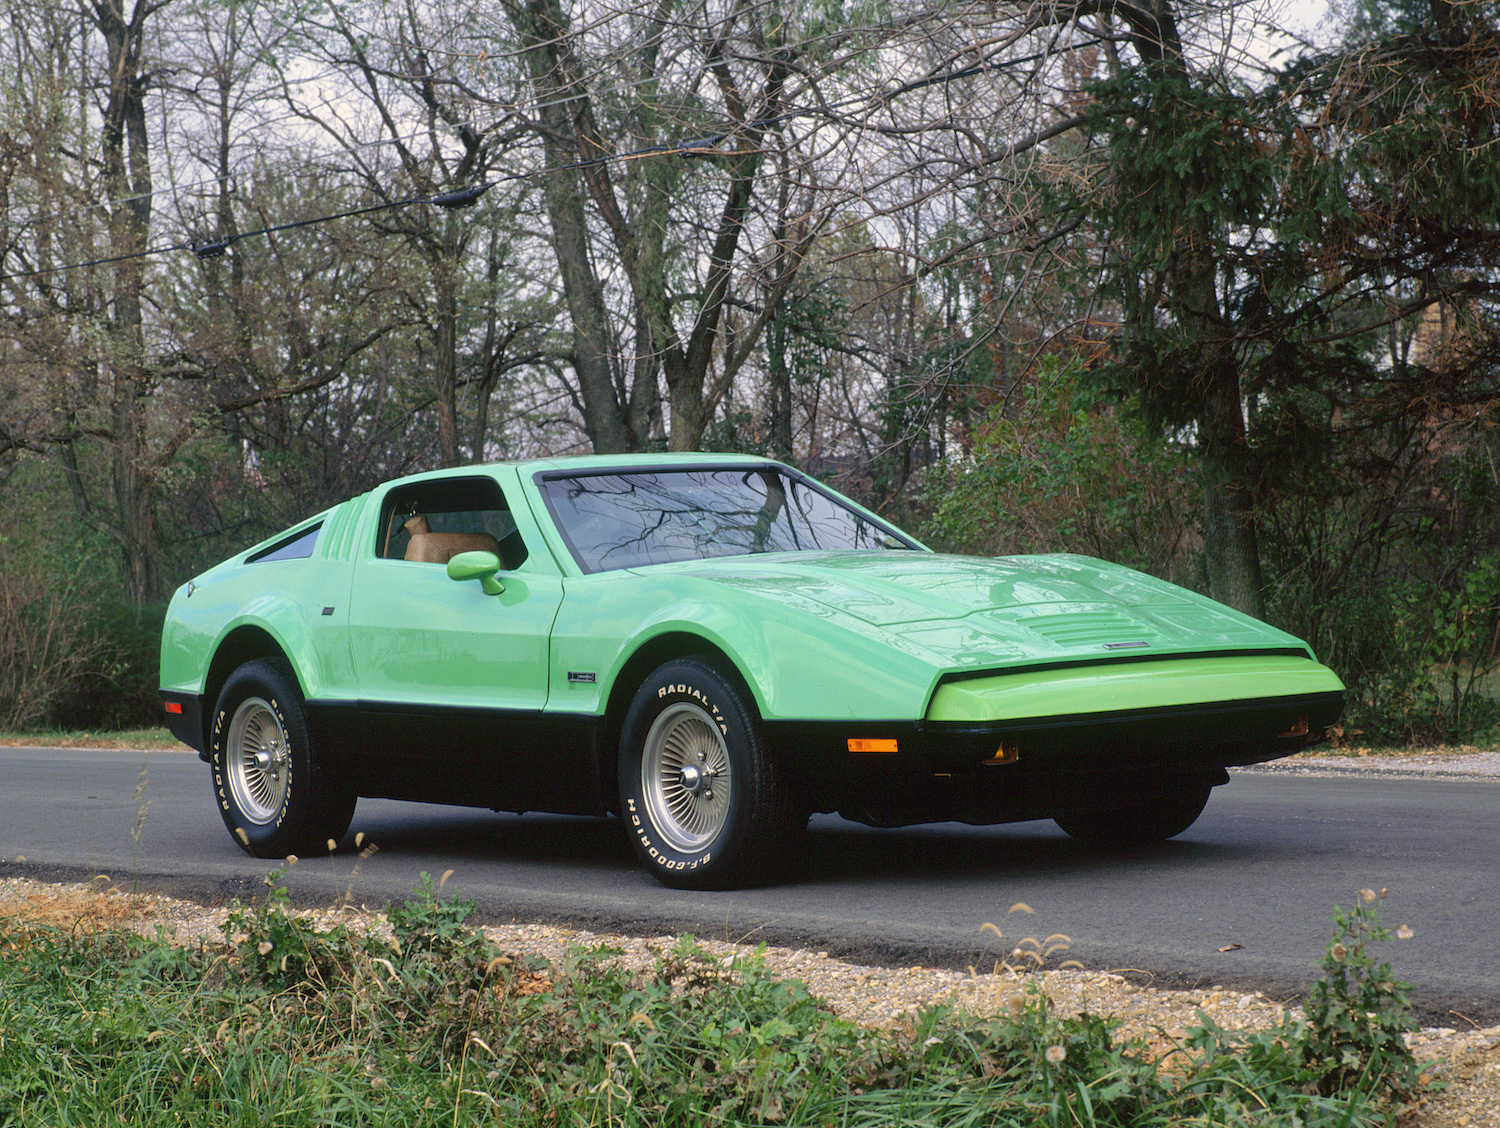 1975 Bricklin SV-1 in green